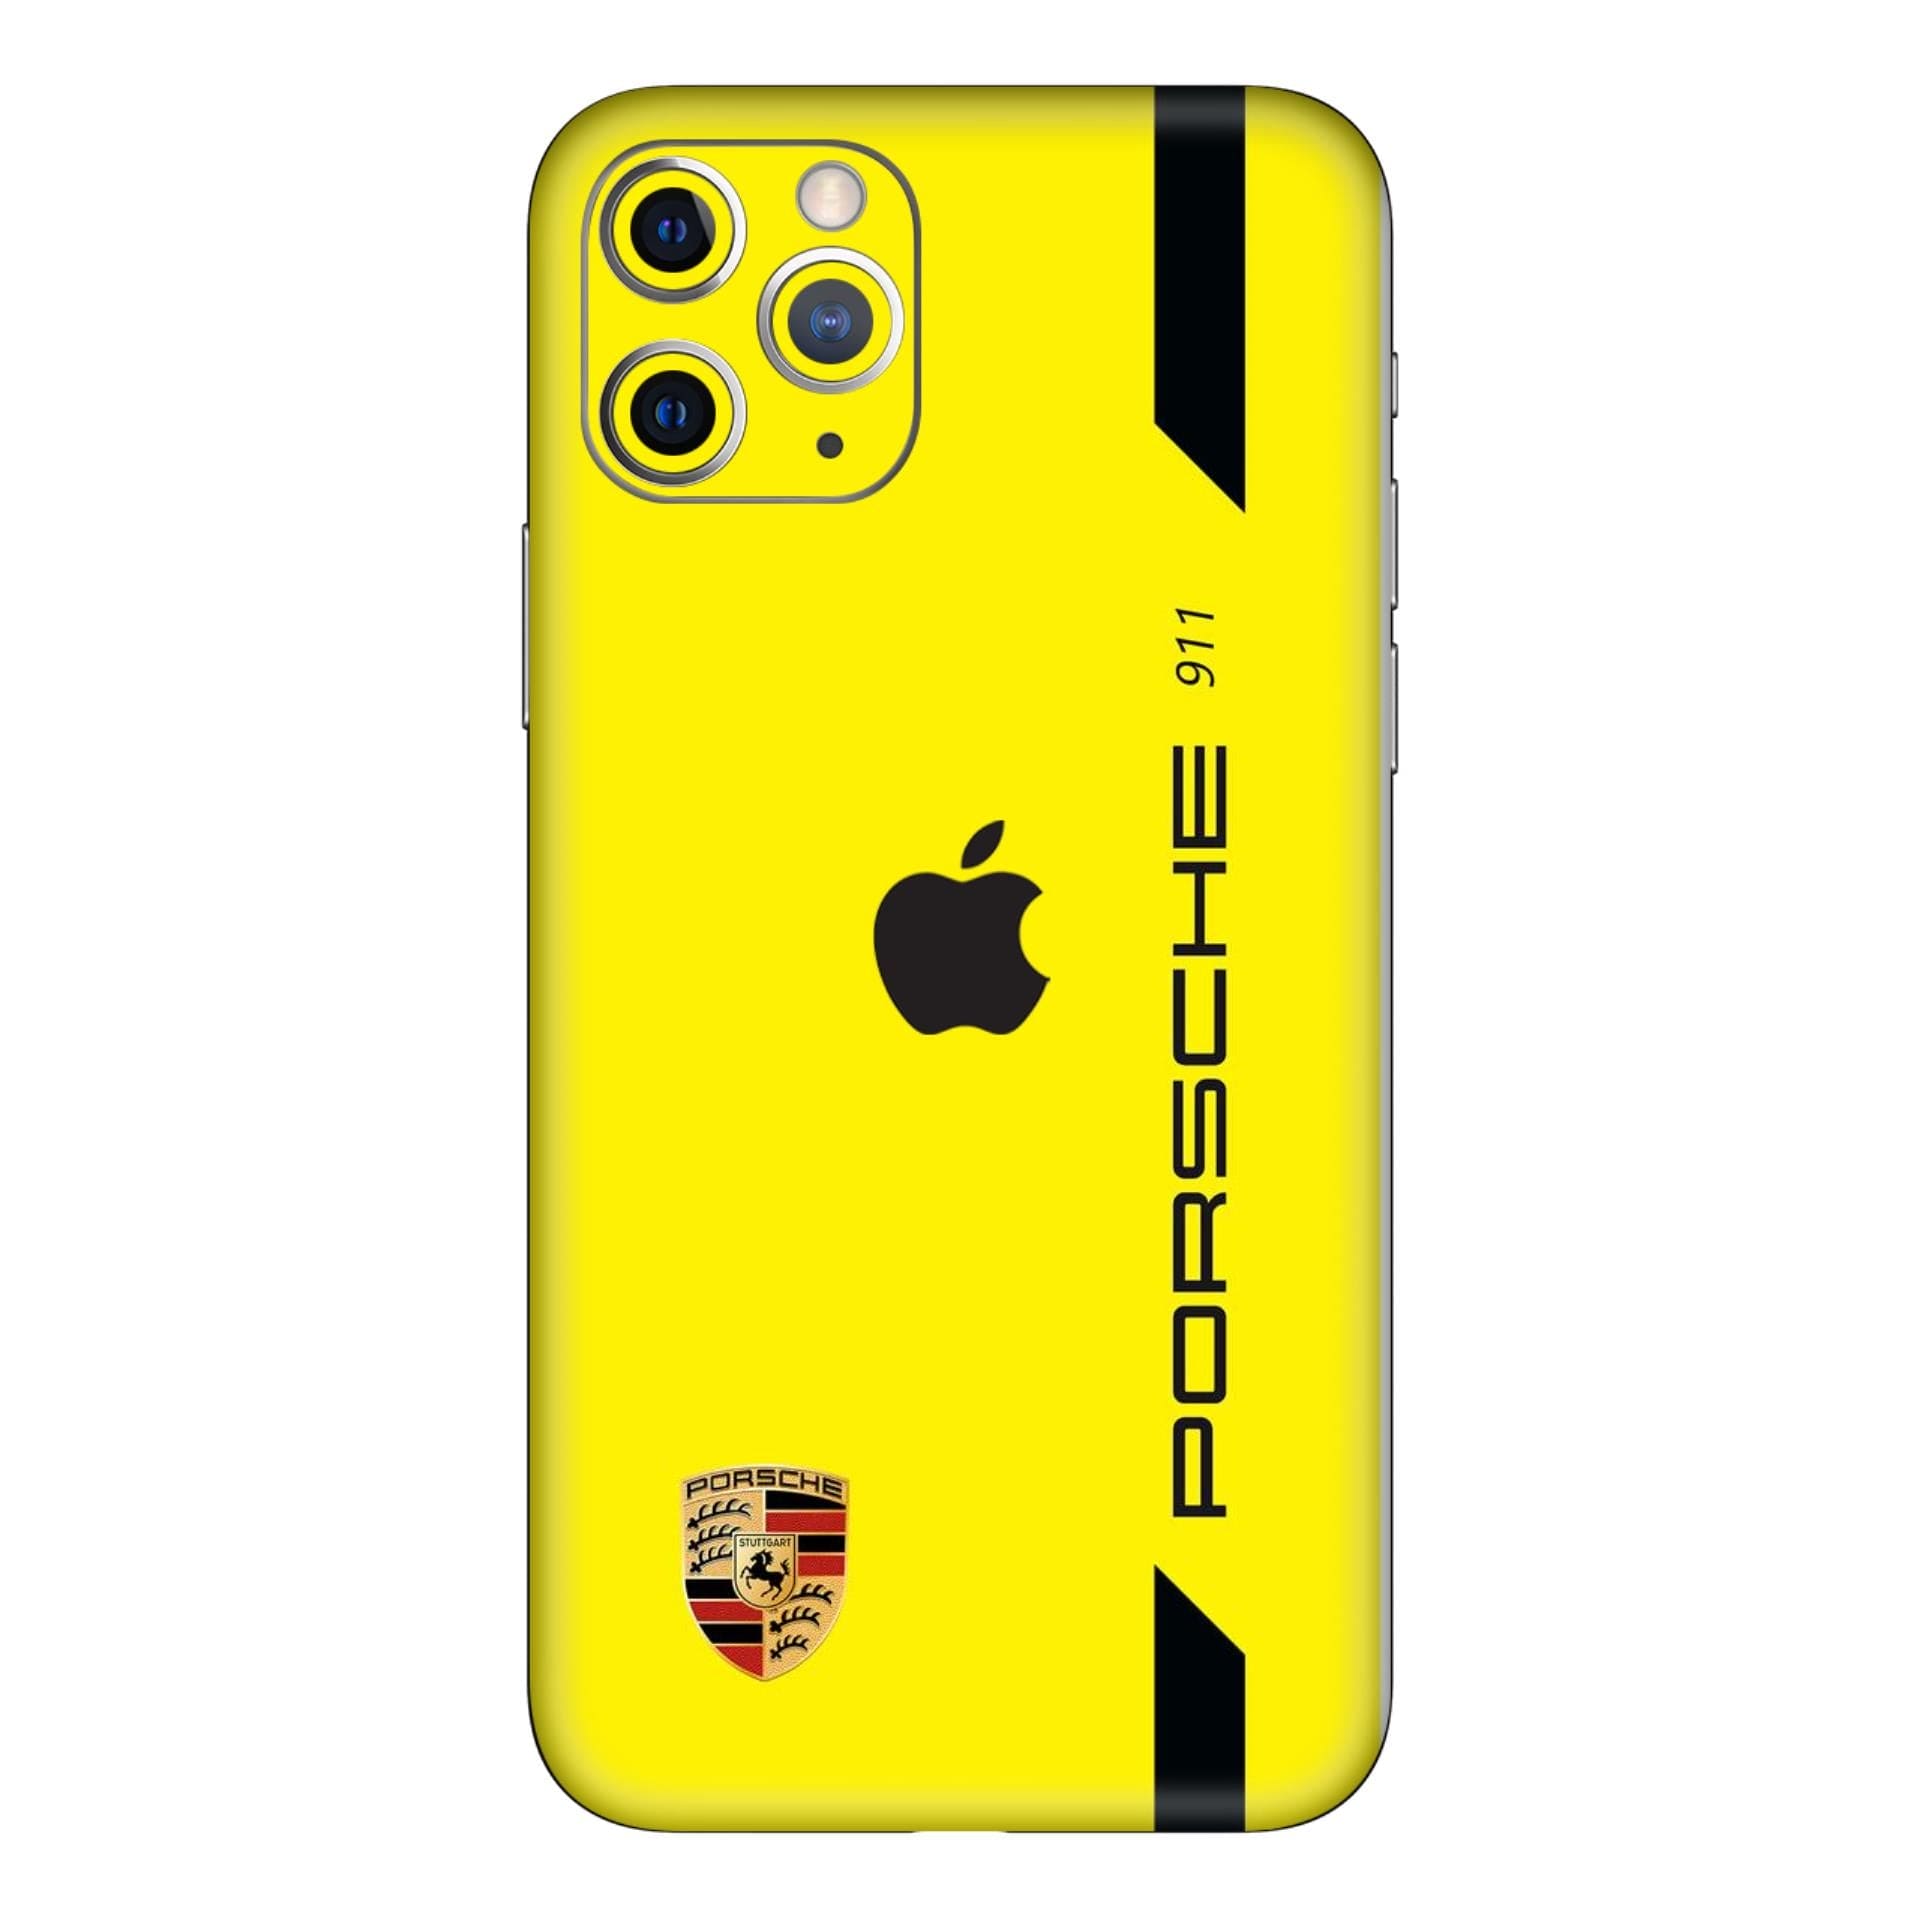 iphone 11 Pro Porsched skins